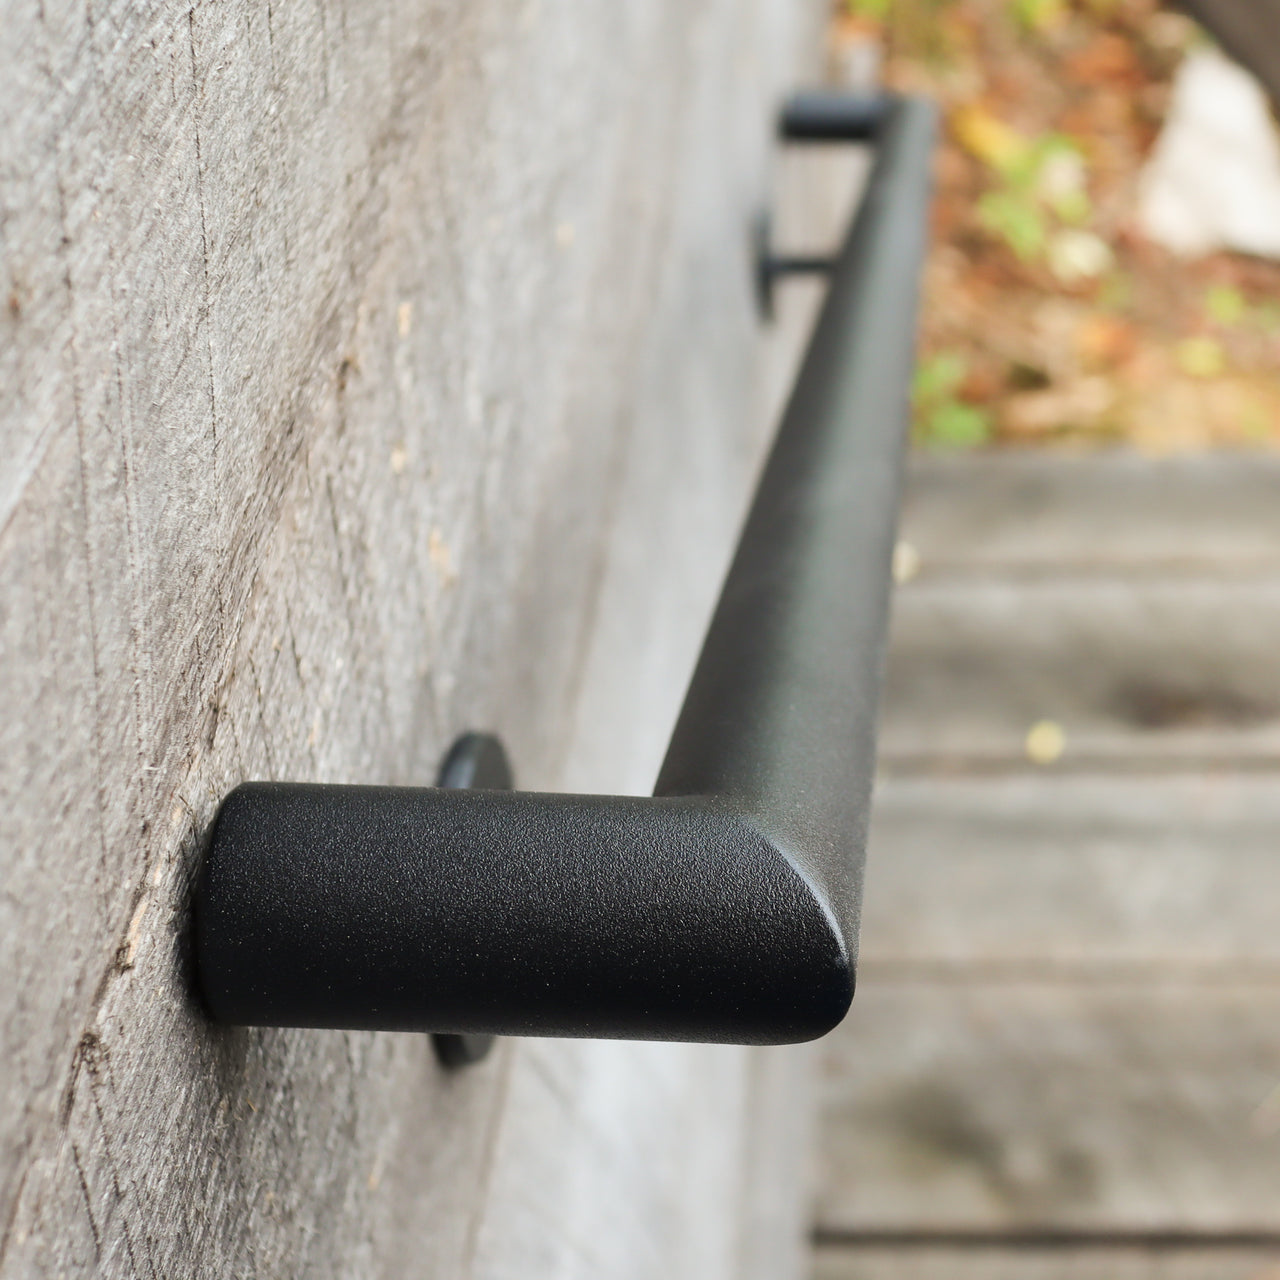 Custom Length Round Metal Handrail with Square Returns - ADA Compliant Return Wall Mount Grab Rail - Modern Stair Rail